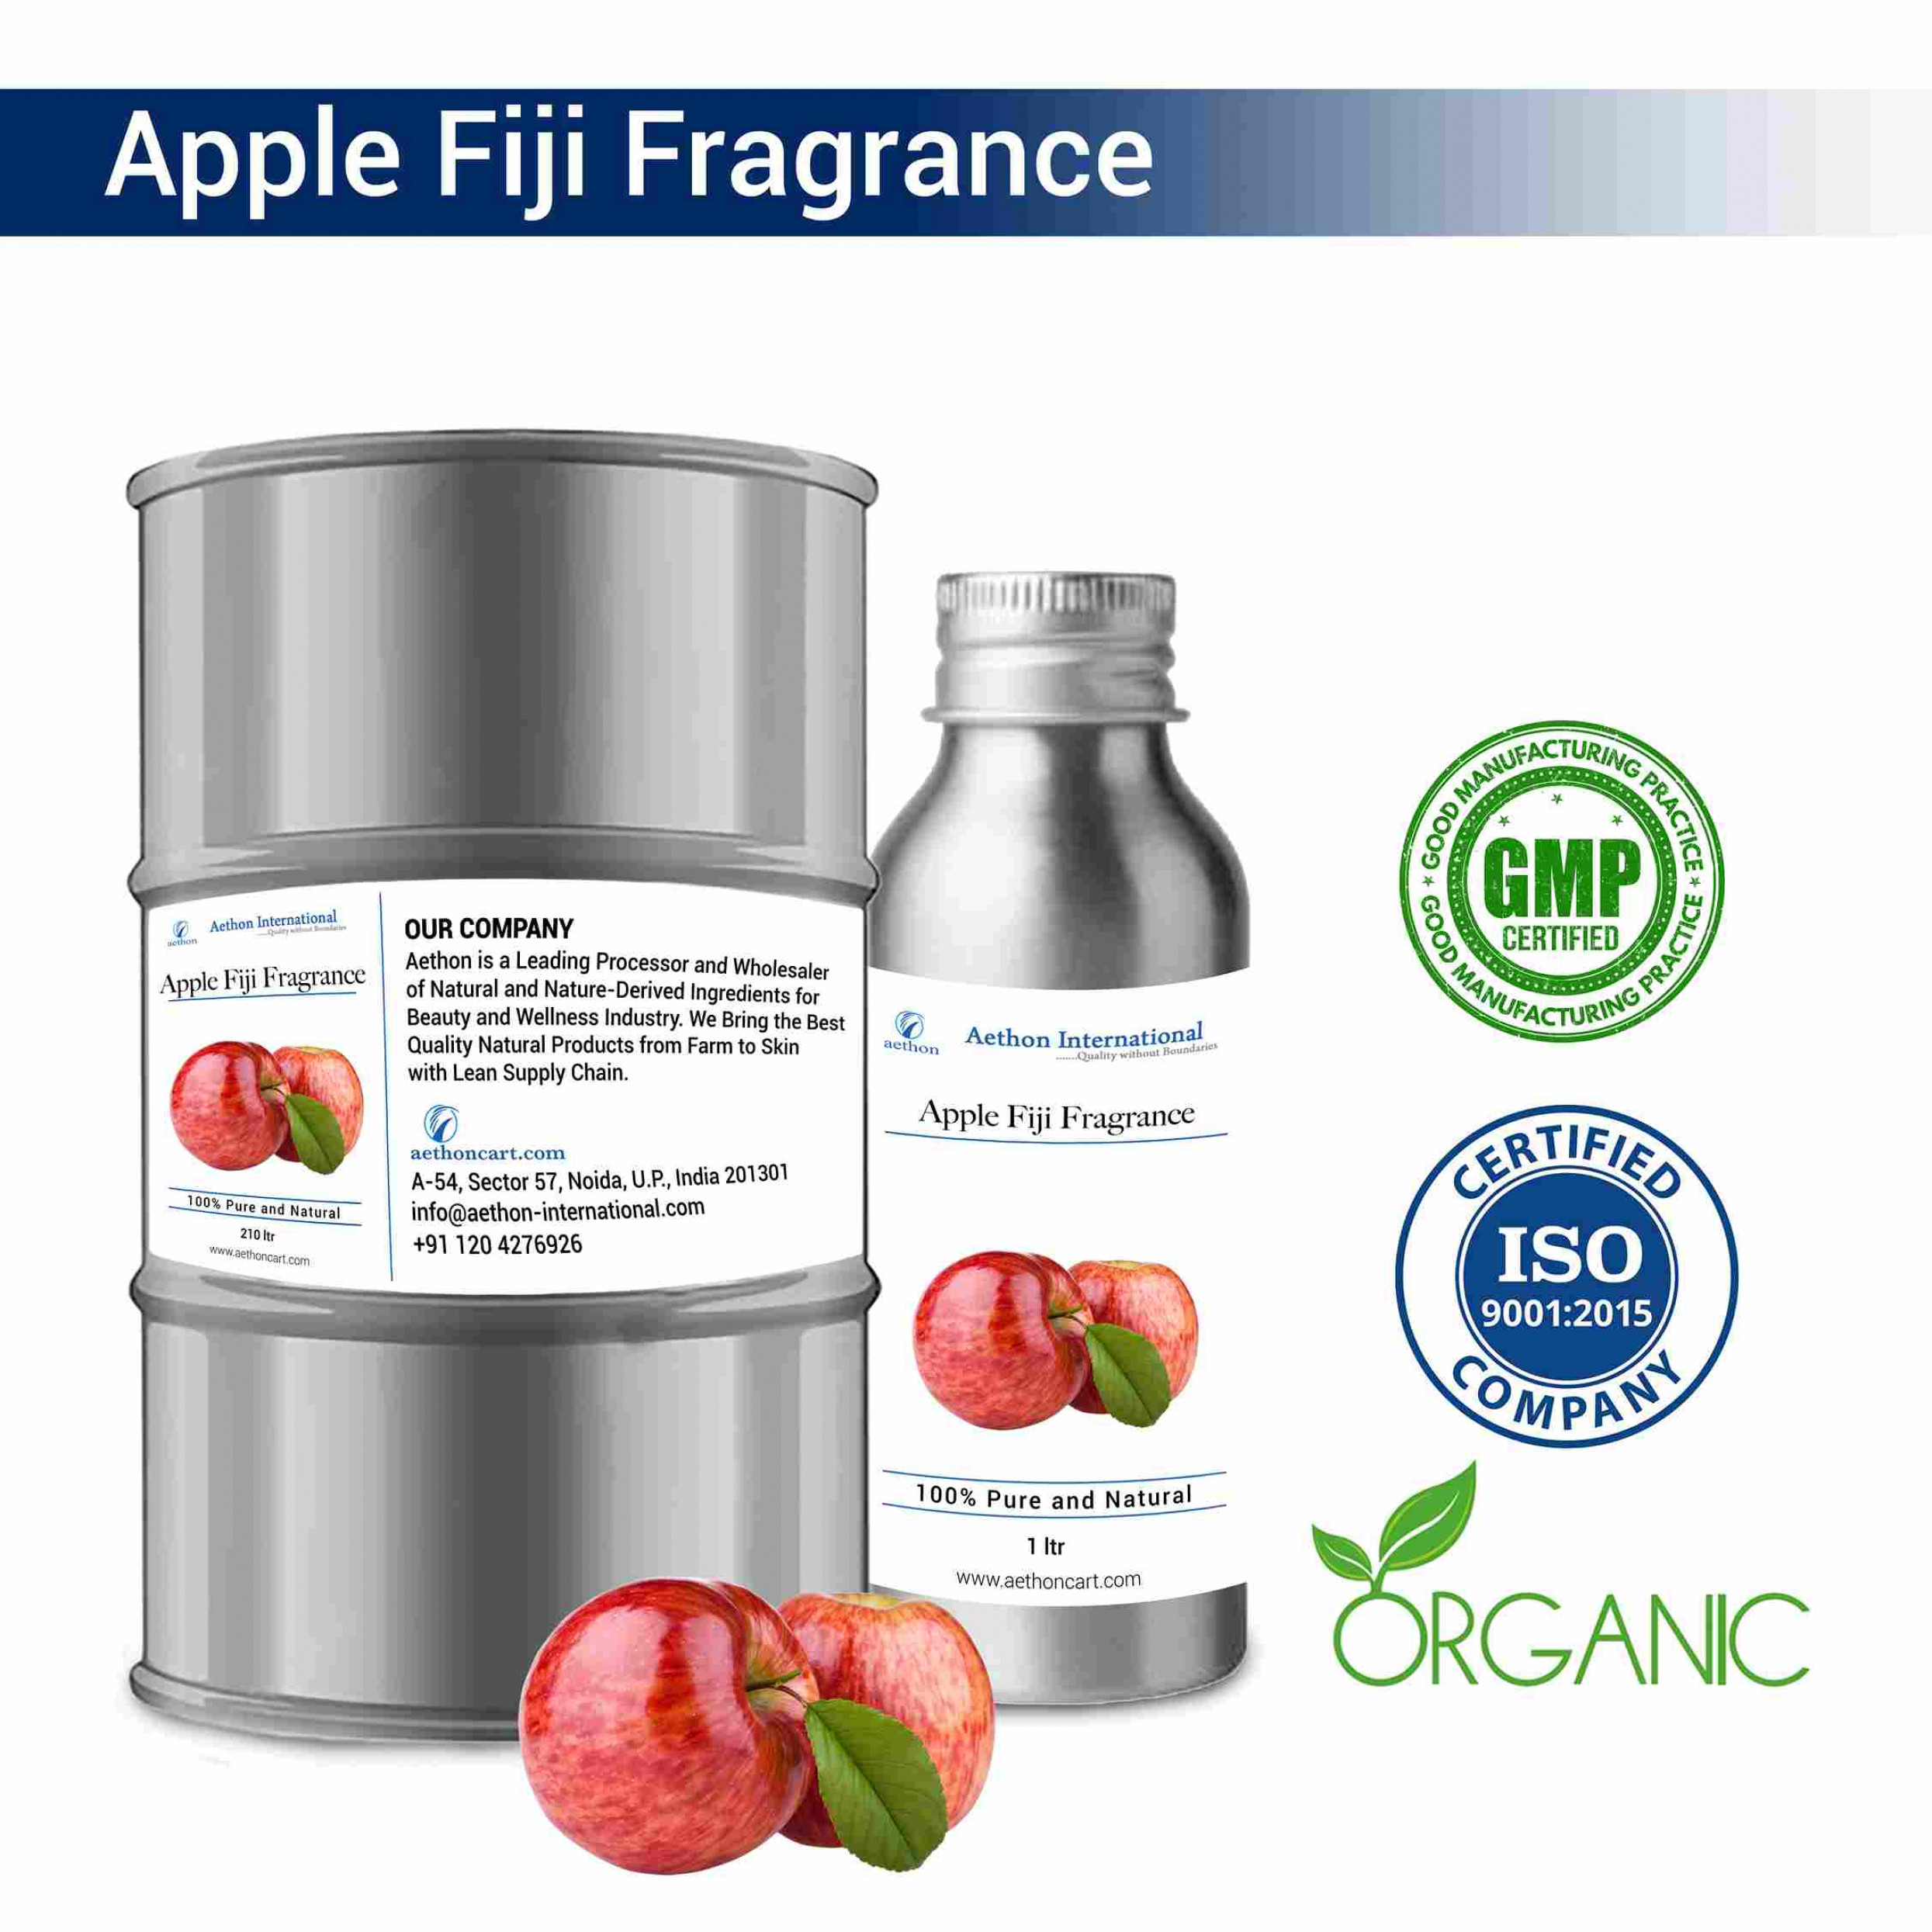 Apple Fiji Fragrance